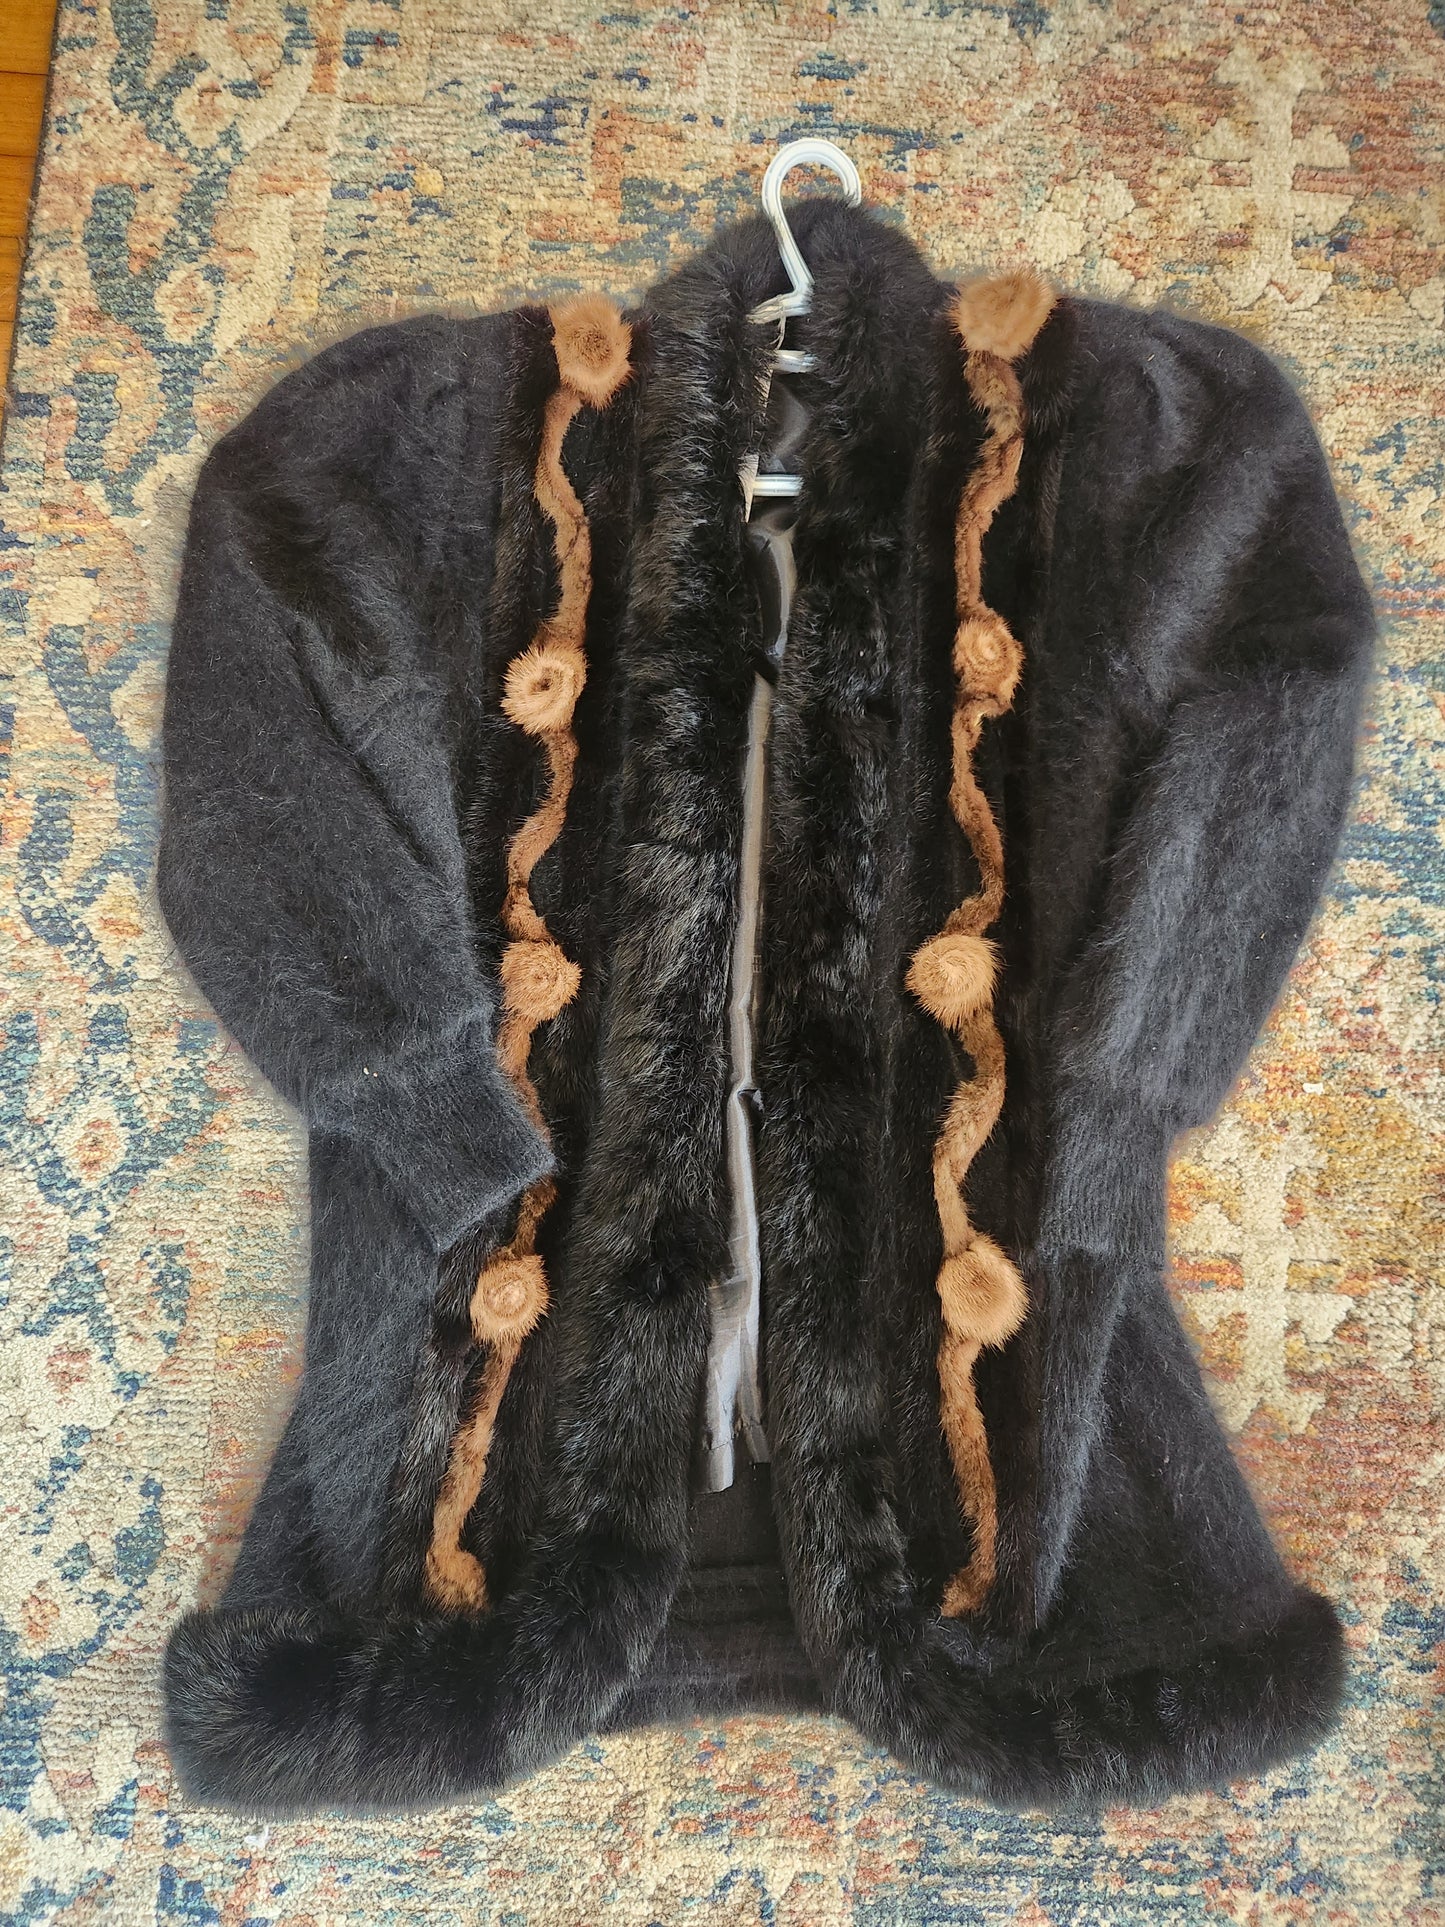 Angora Rabbit and Wool Sweater Coat